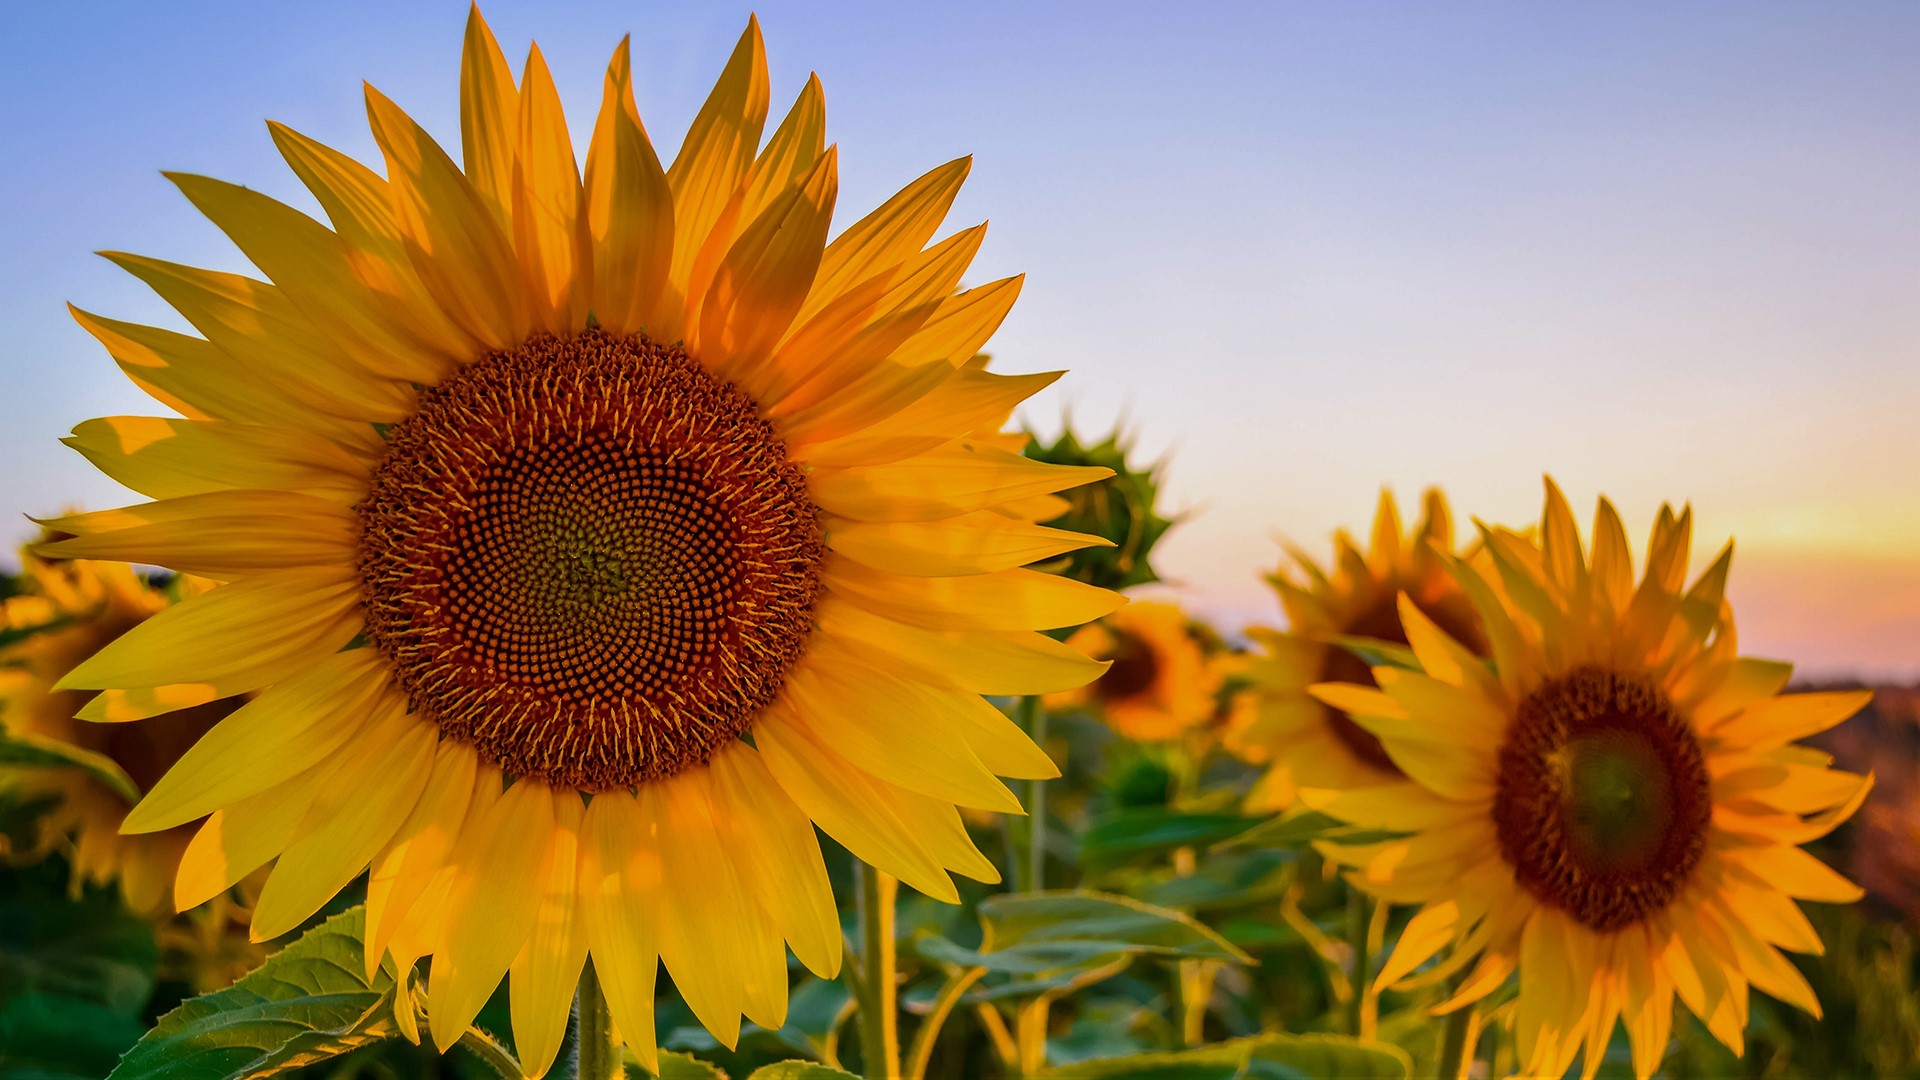 Sunflower at sunset | Windows 10 SpotLight Images